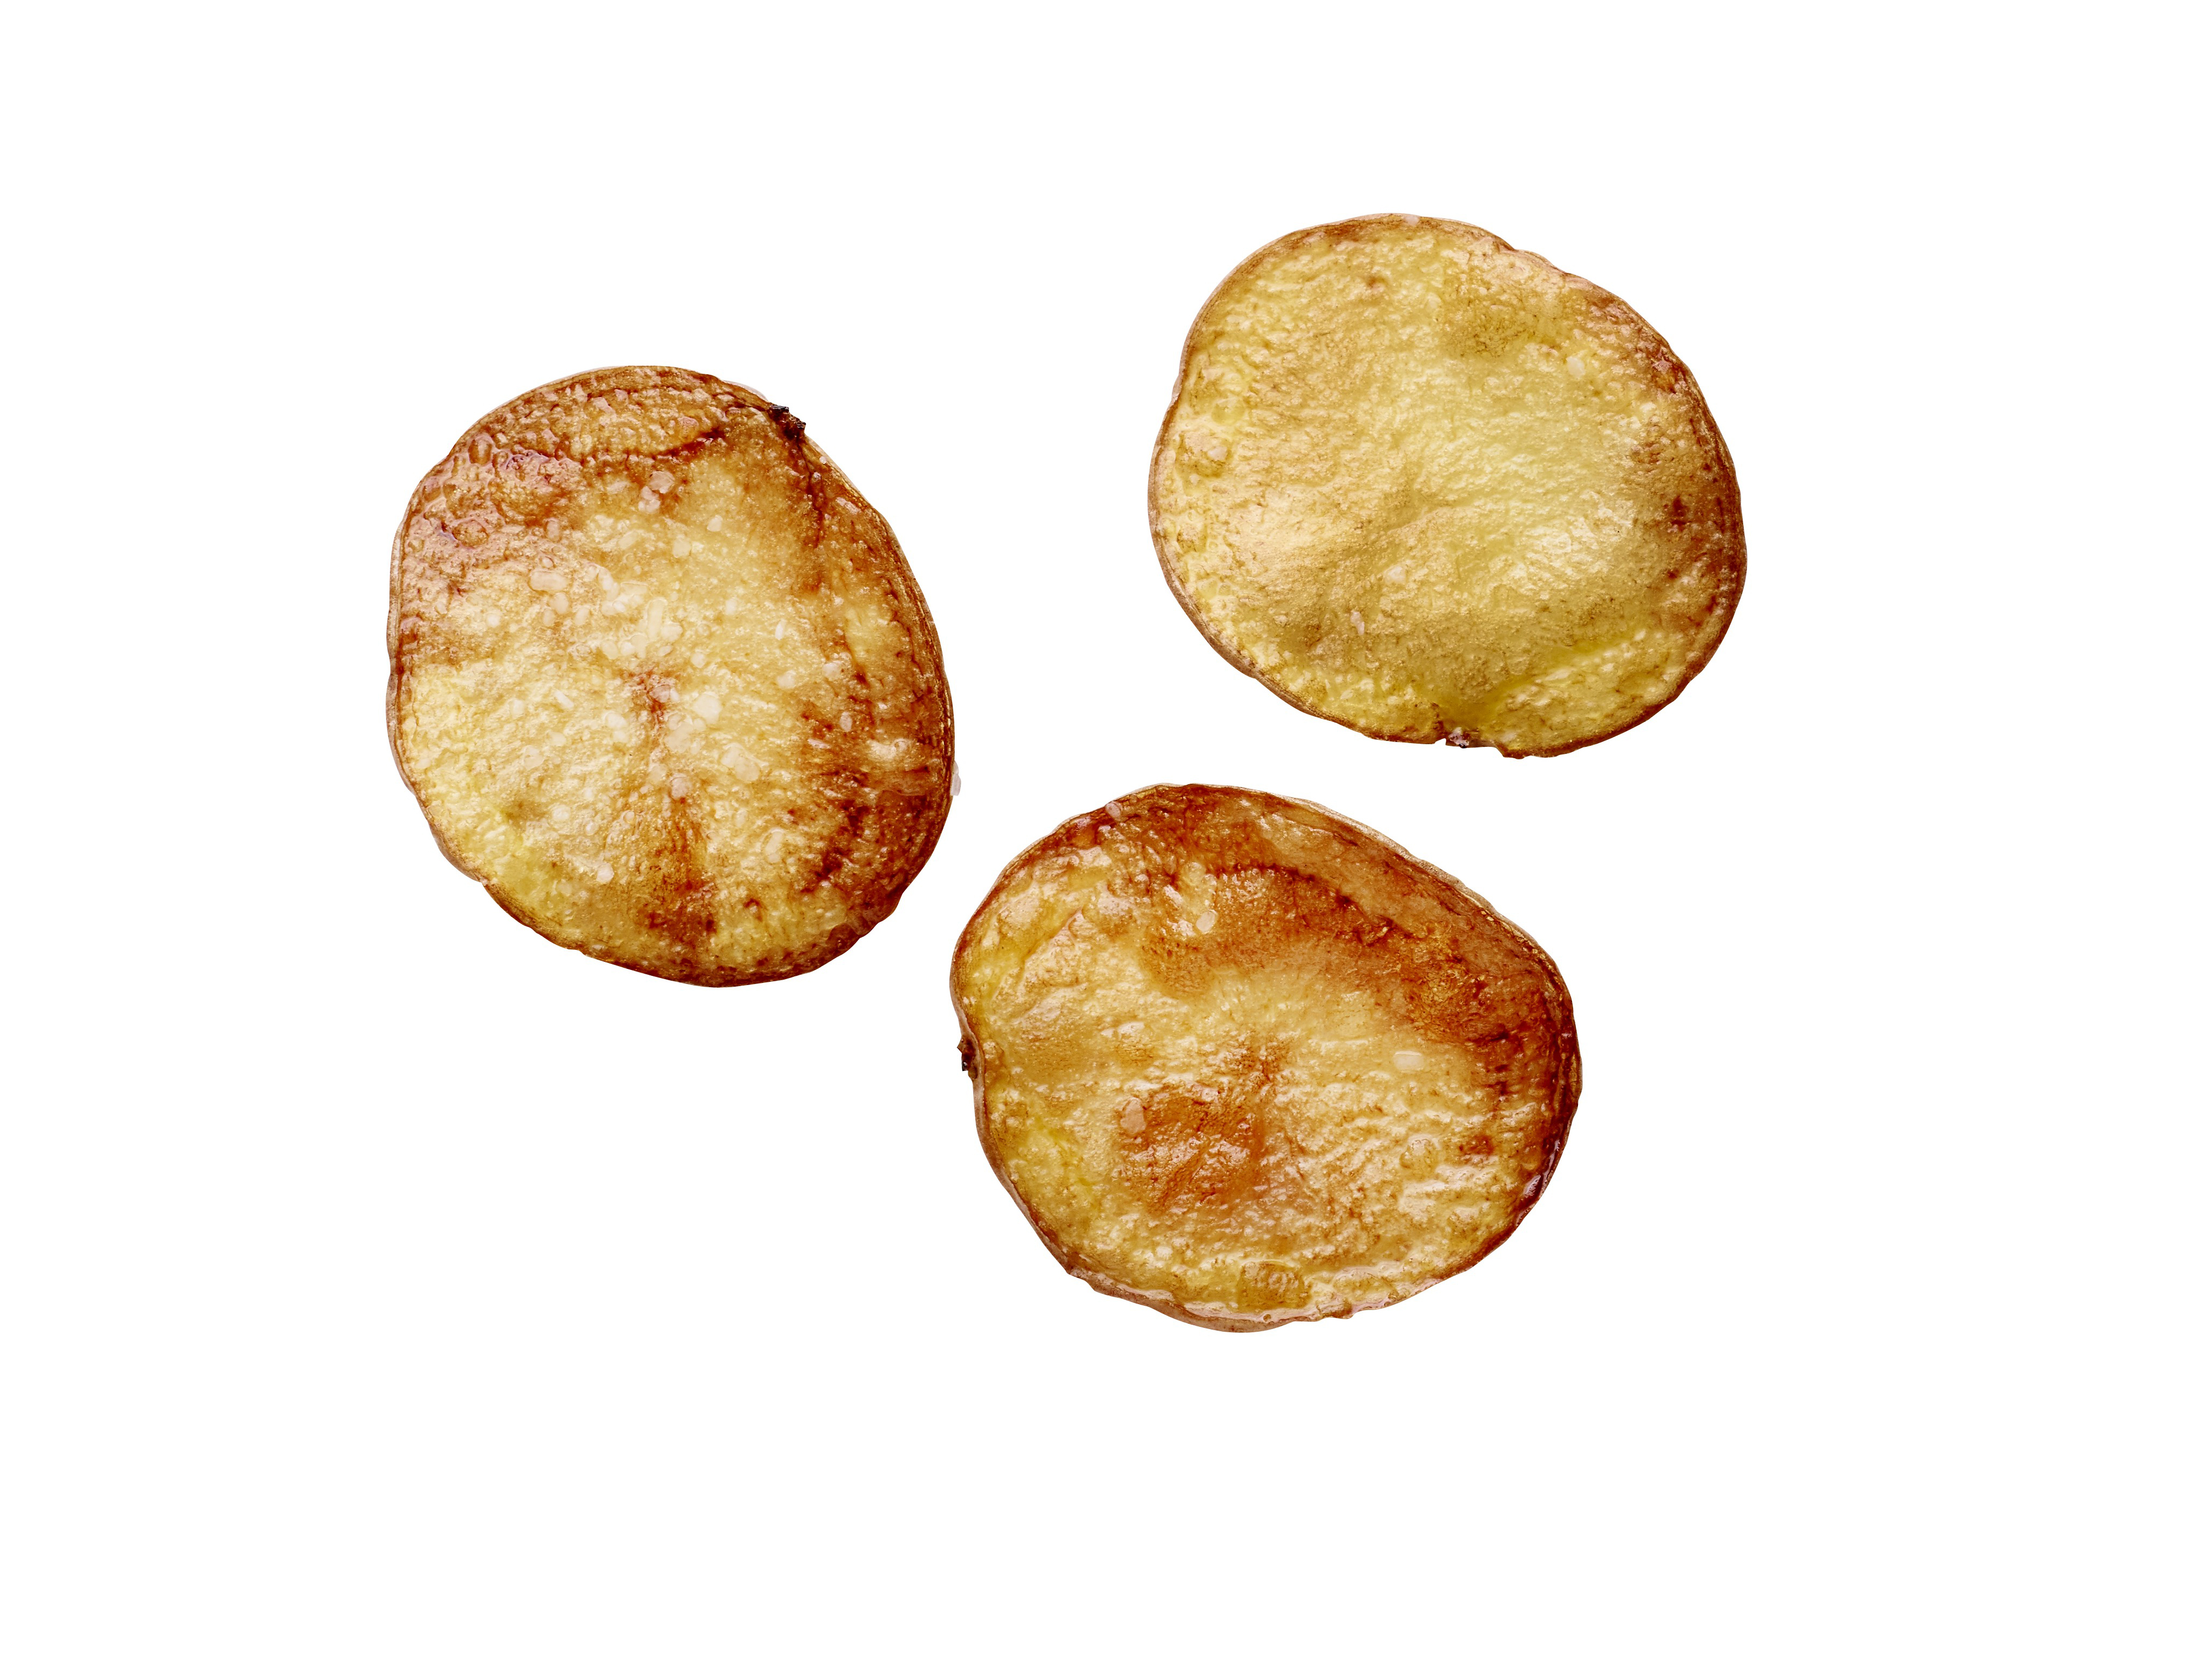 https://www.foodnetwork.com/content/dam/images/food/fullset/2016/2/16/0/FNM_030116-Cooking-School-Potatoes.jpg